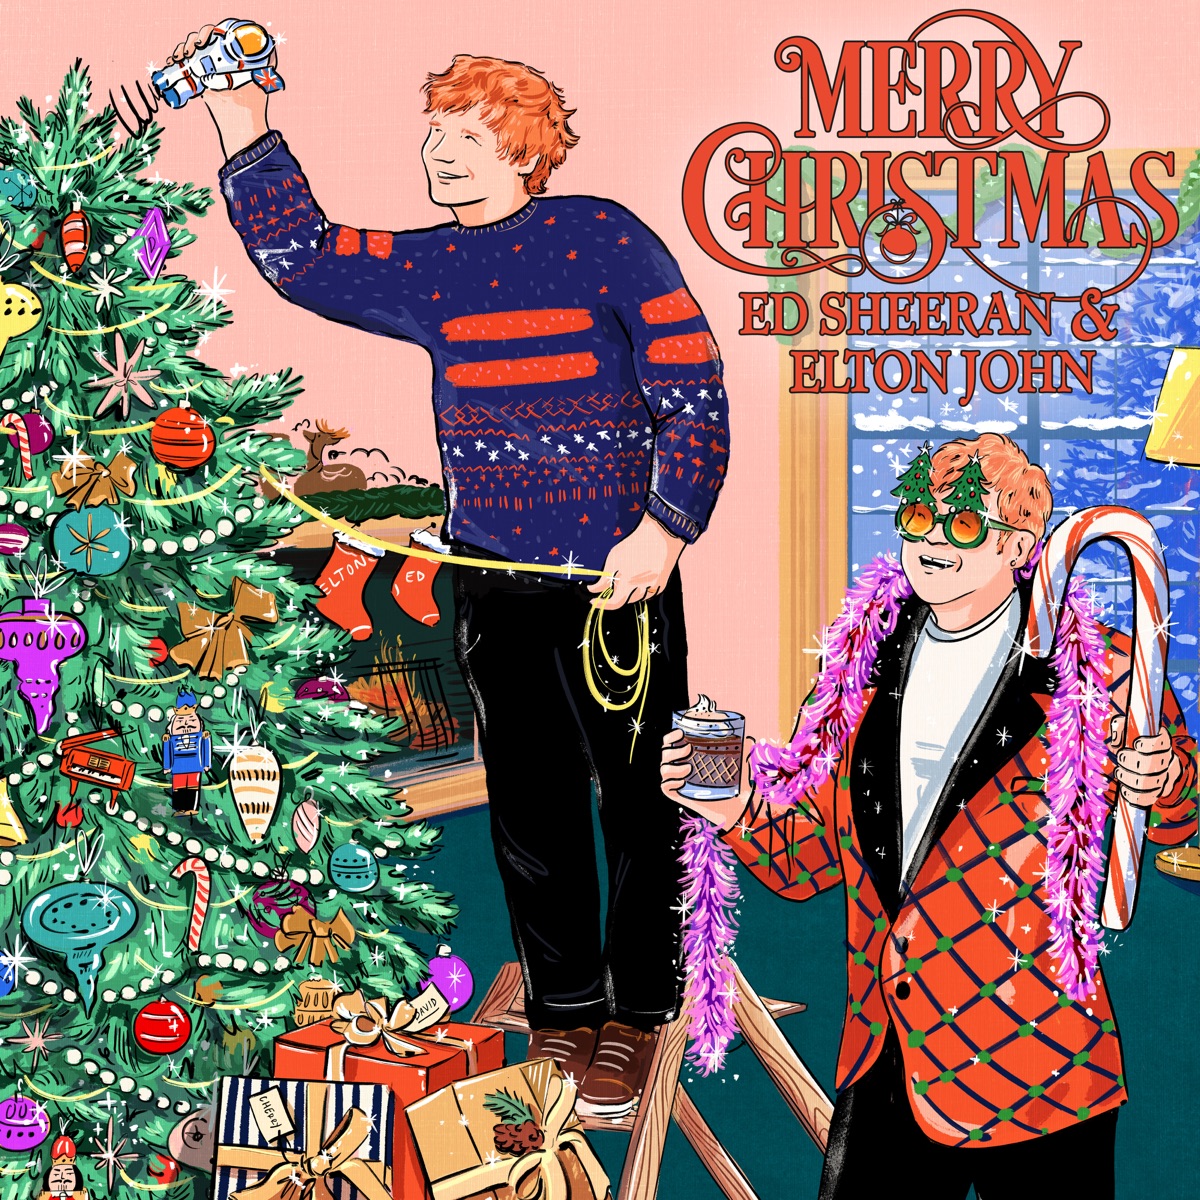 『Ed Sheeran & Elton John - Merry Christmas 歌詞』収録の『Merry Christmas』ジャケット